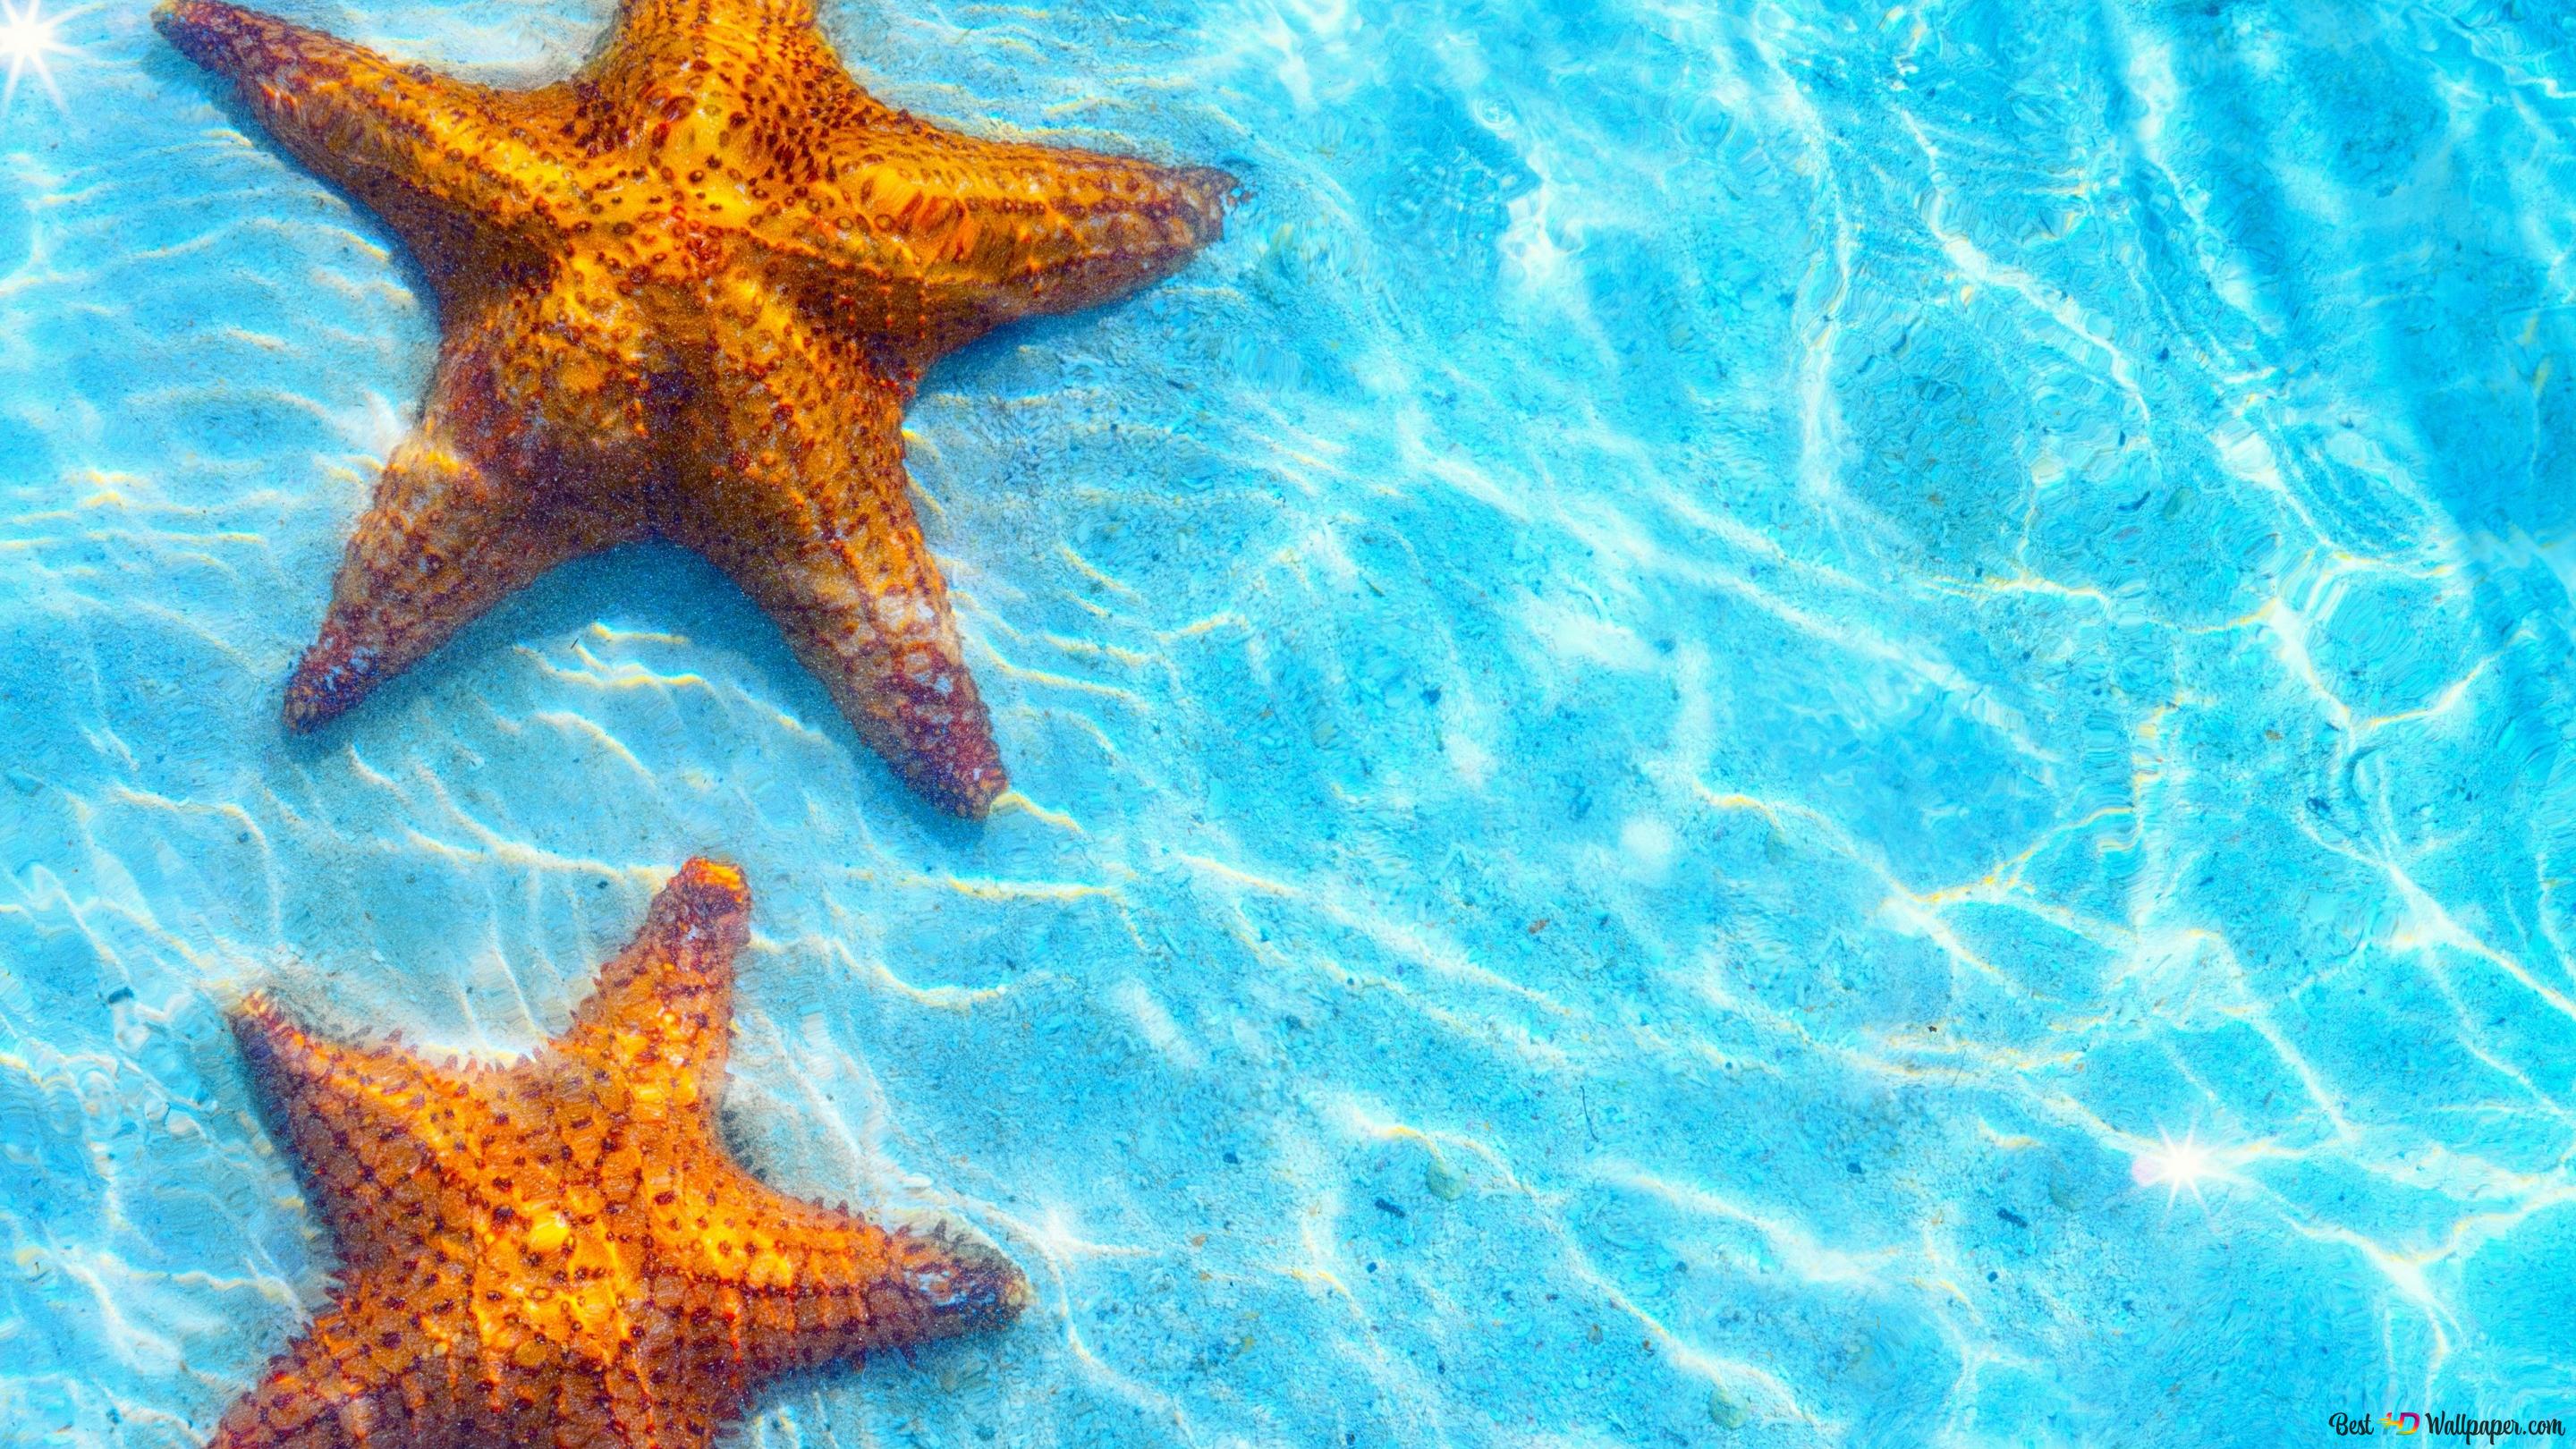 Two starfish in the water wallpaper - Beach wallpapers - #3699 - Starfish